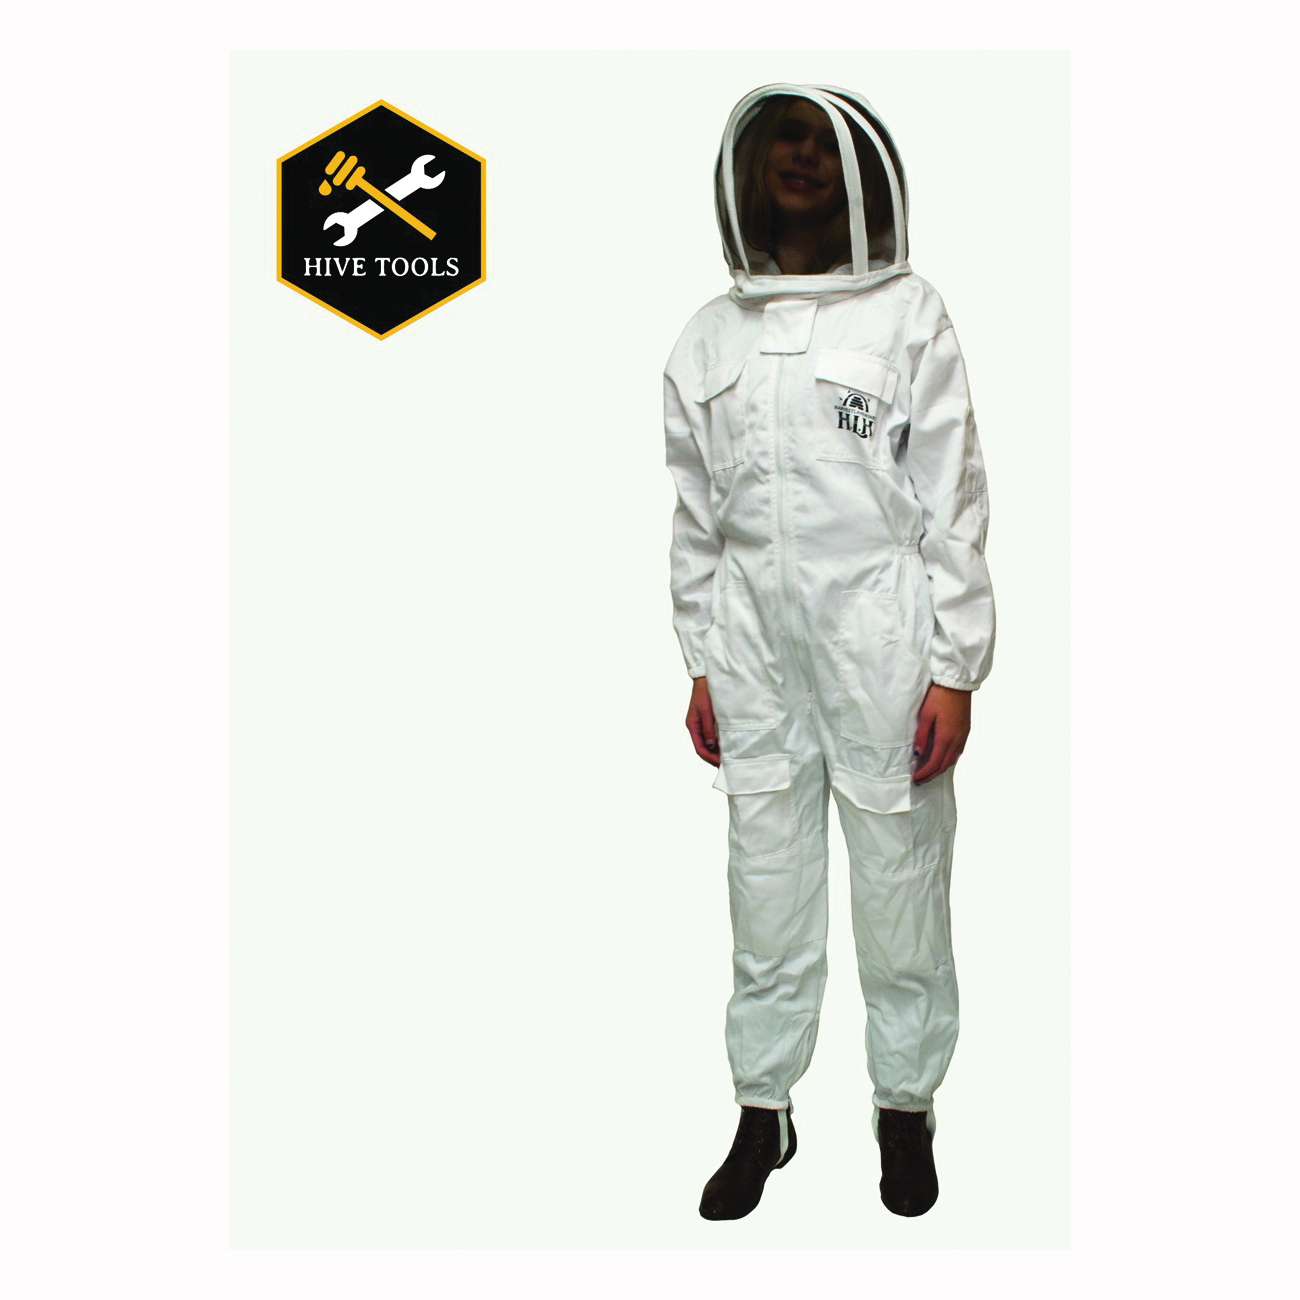 CLOTHSXL-101 Beekeeping Suit, XL, Zipper Closure, Polycotton